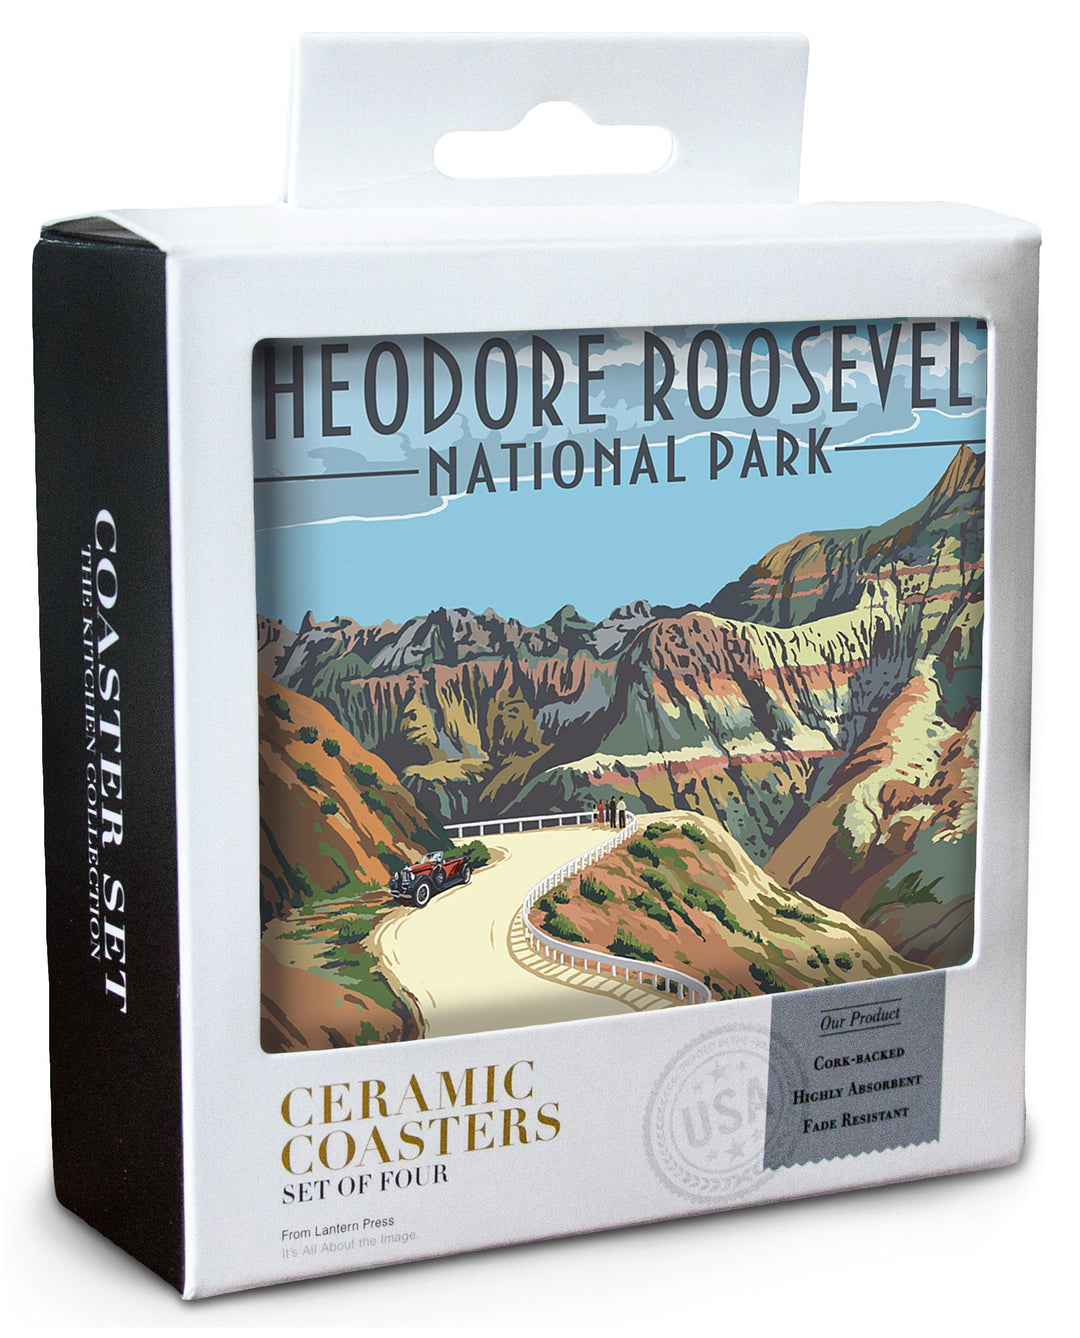 Theodore Roosevelt National Park, North Dakota, Road Scene, Lantern Press Artwork, Coaster Set Coasters Lantern Press 